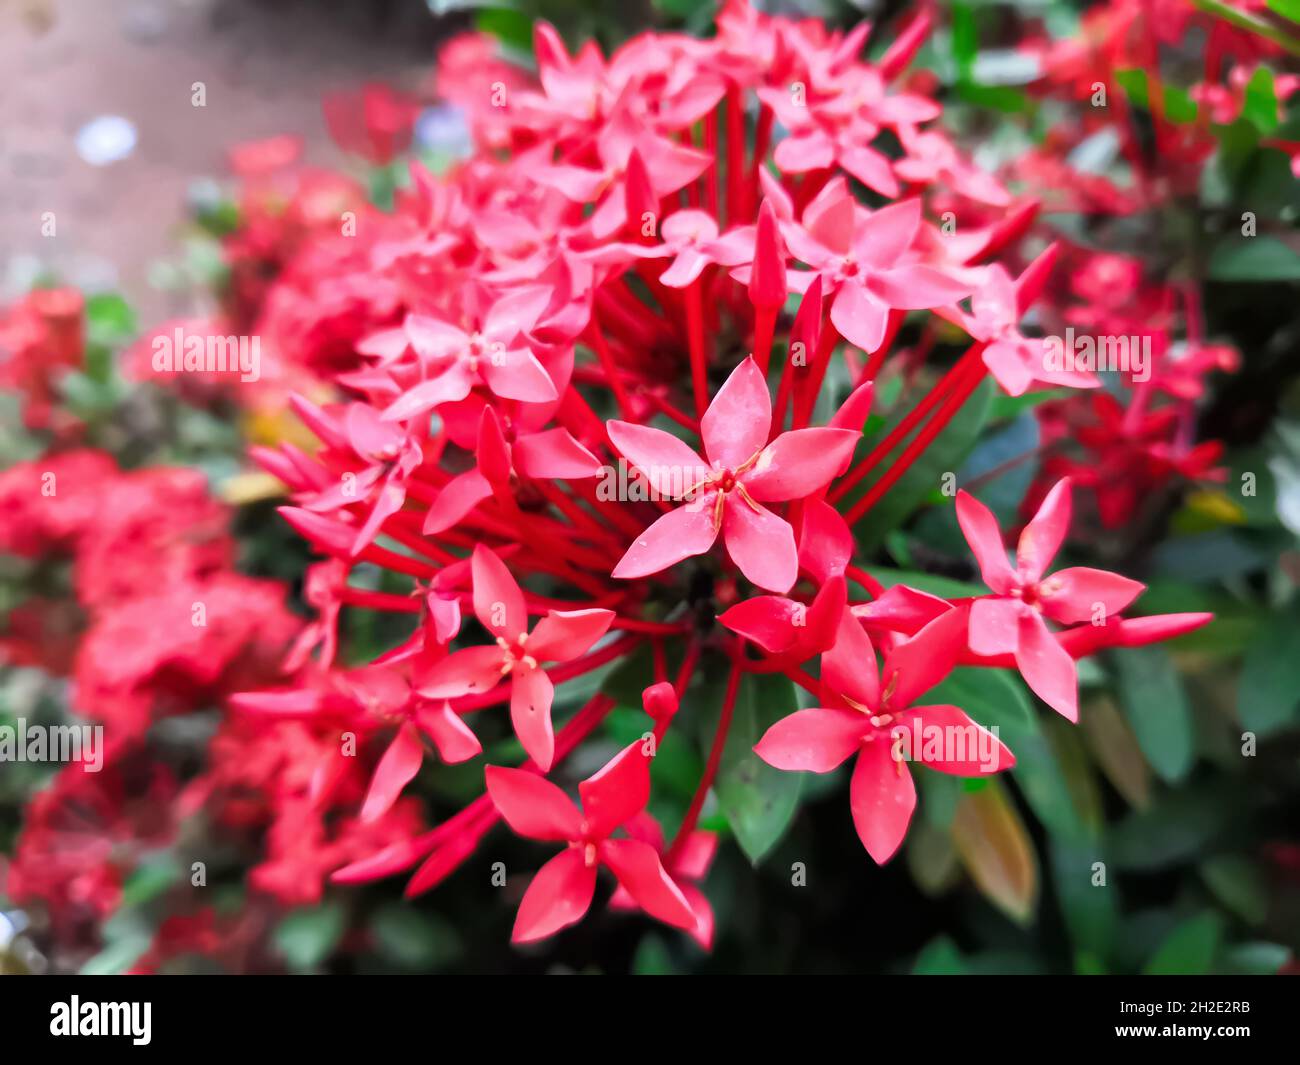 Closeup Image Of Indian Red Ixora Flower Or Indian Jasmine. Selective Focus Stock Photo